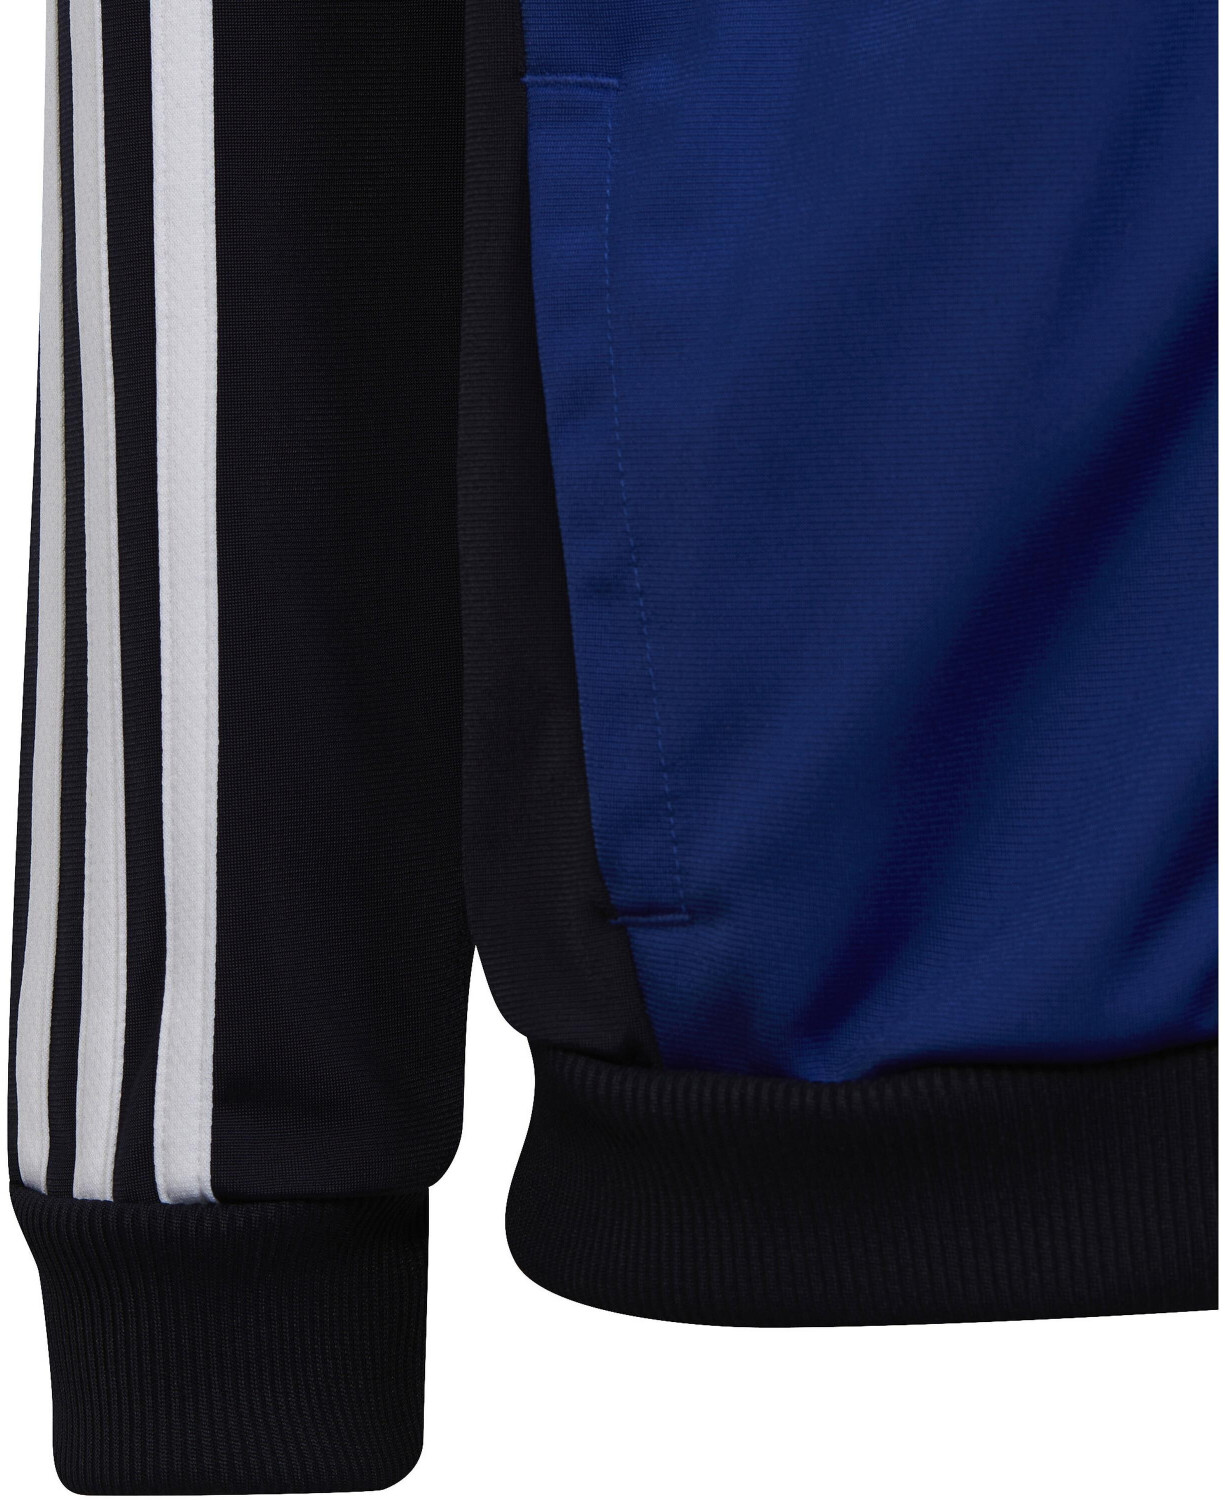 Adidas Boys Tracksuit (IC5681) legend ink/semi lucid blue/white ab 40,01 €  | Preisvergleich bei